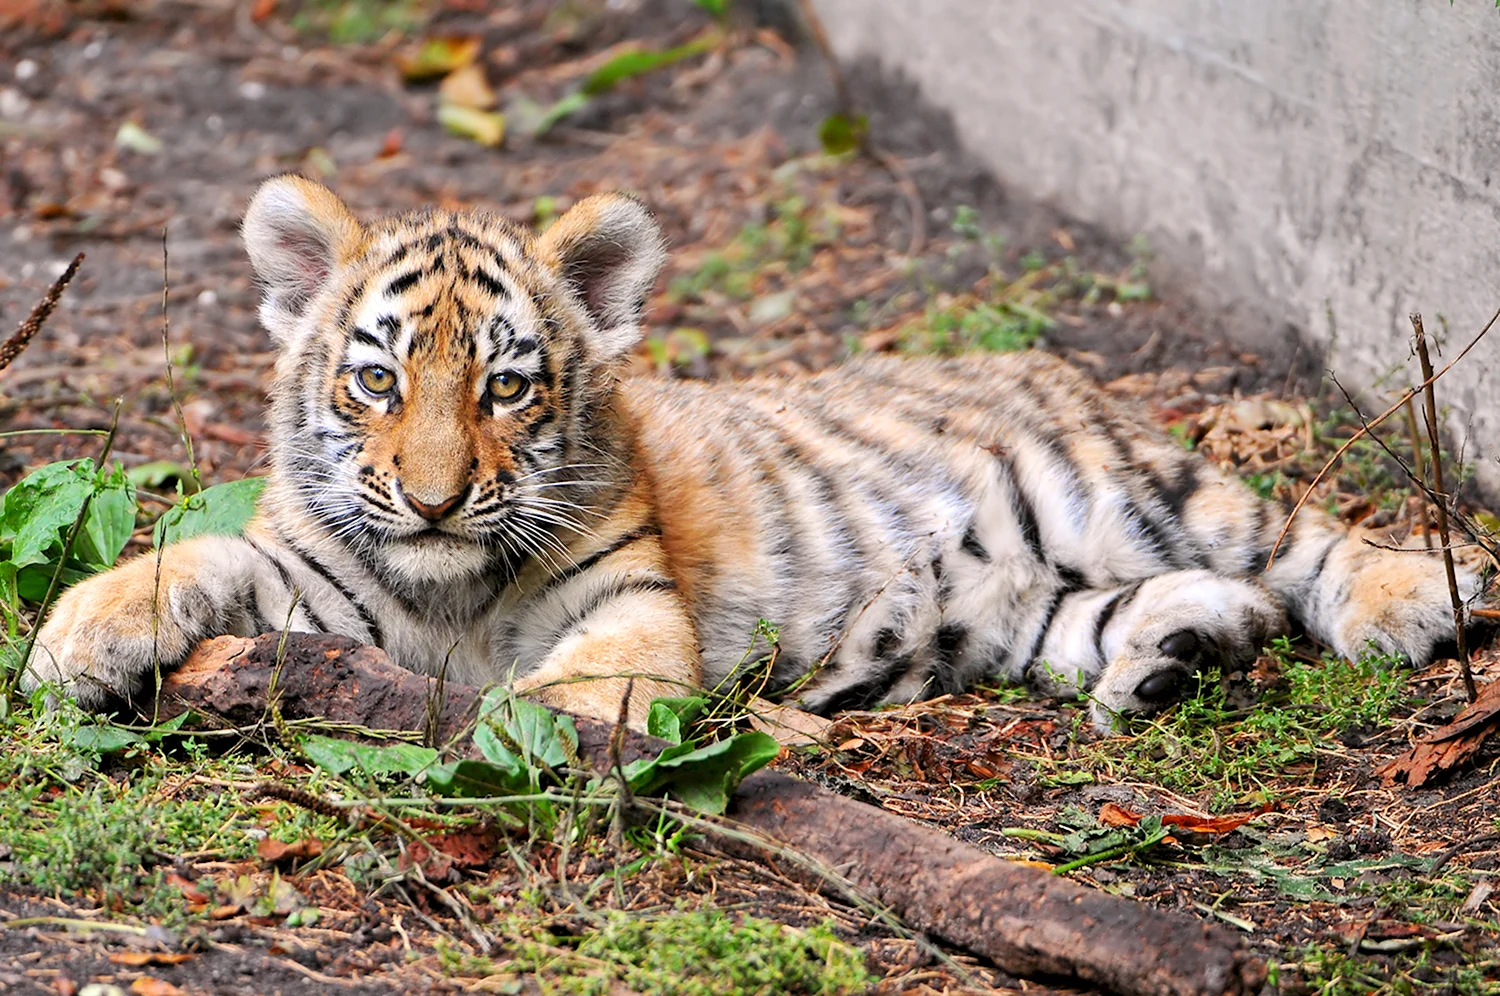 Молодой тигр